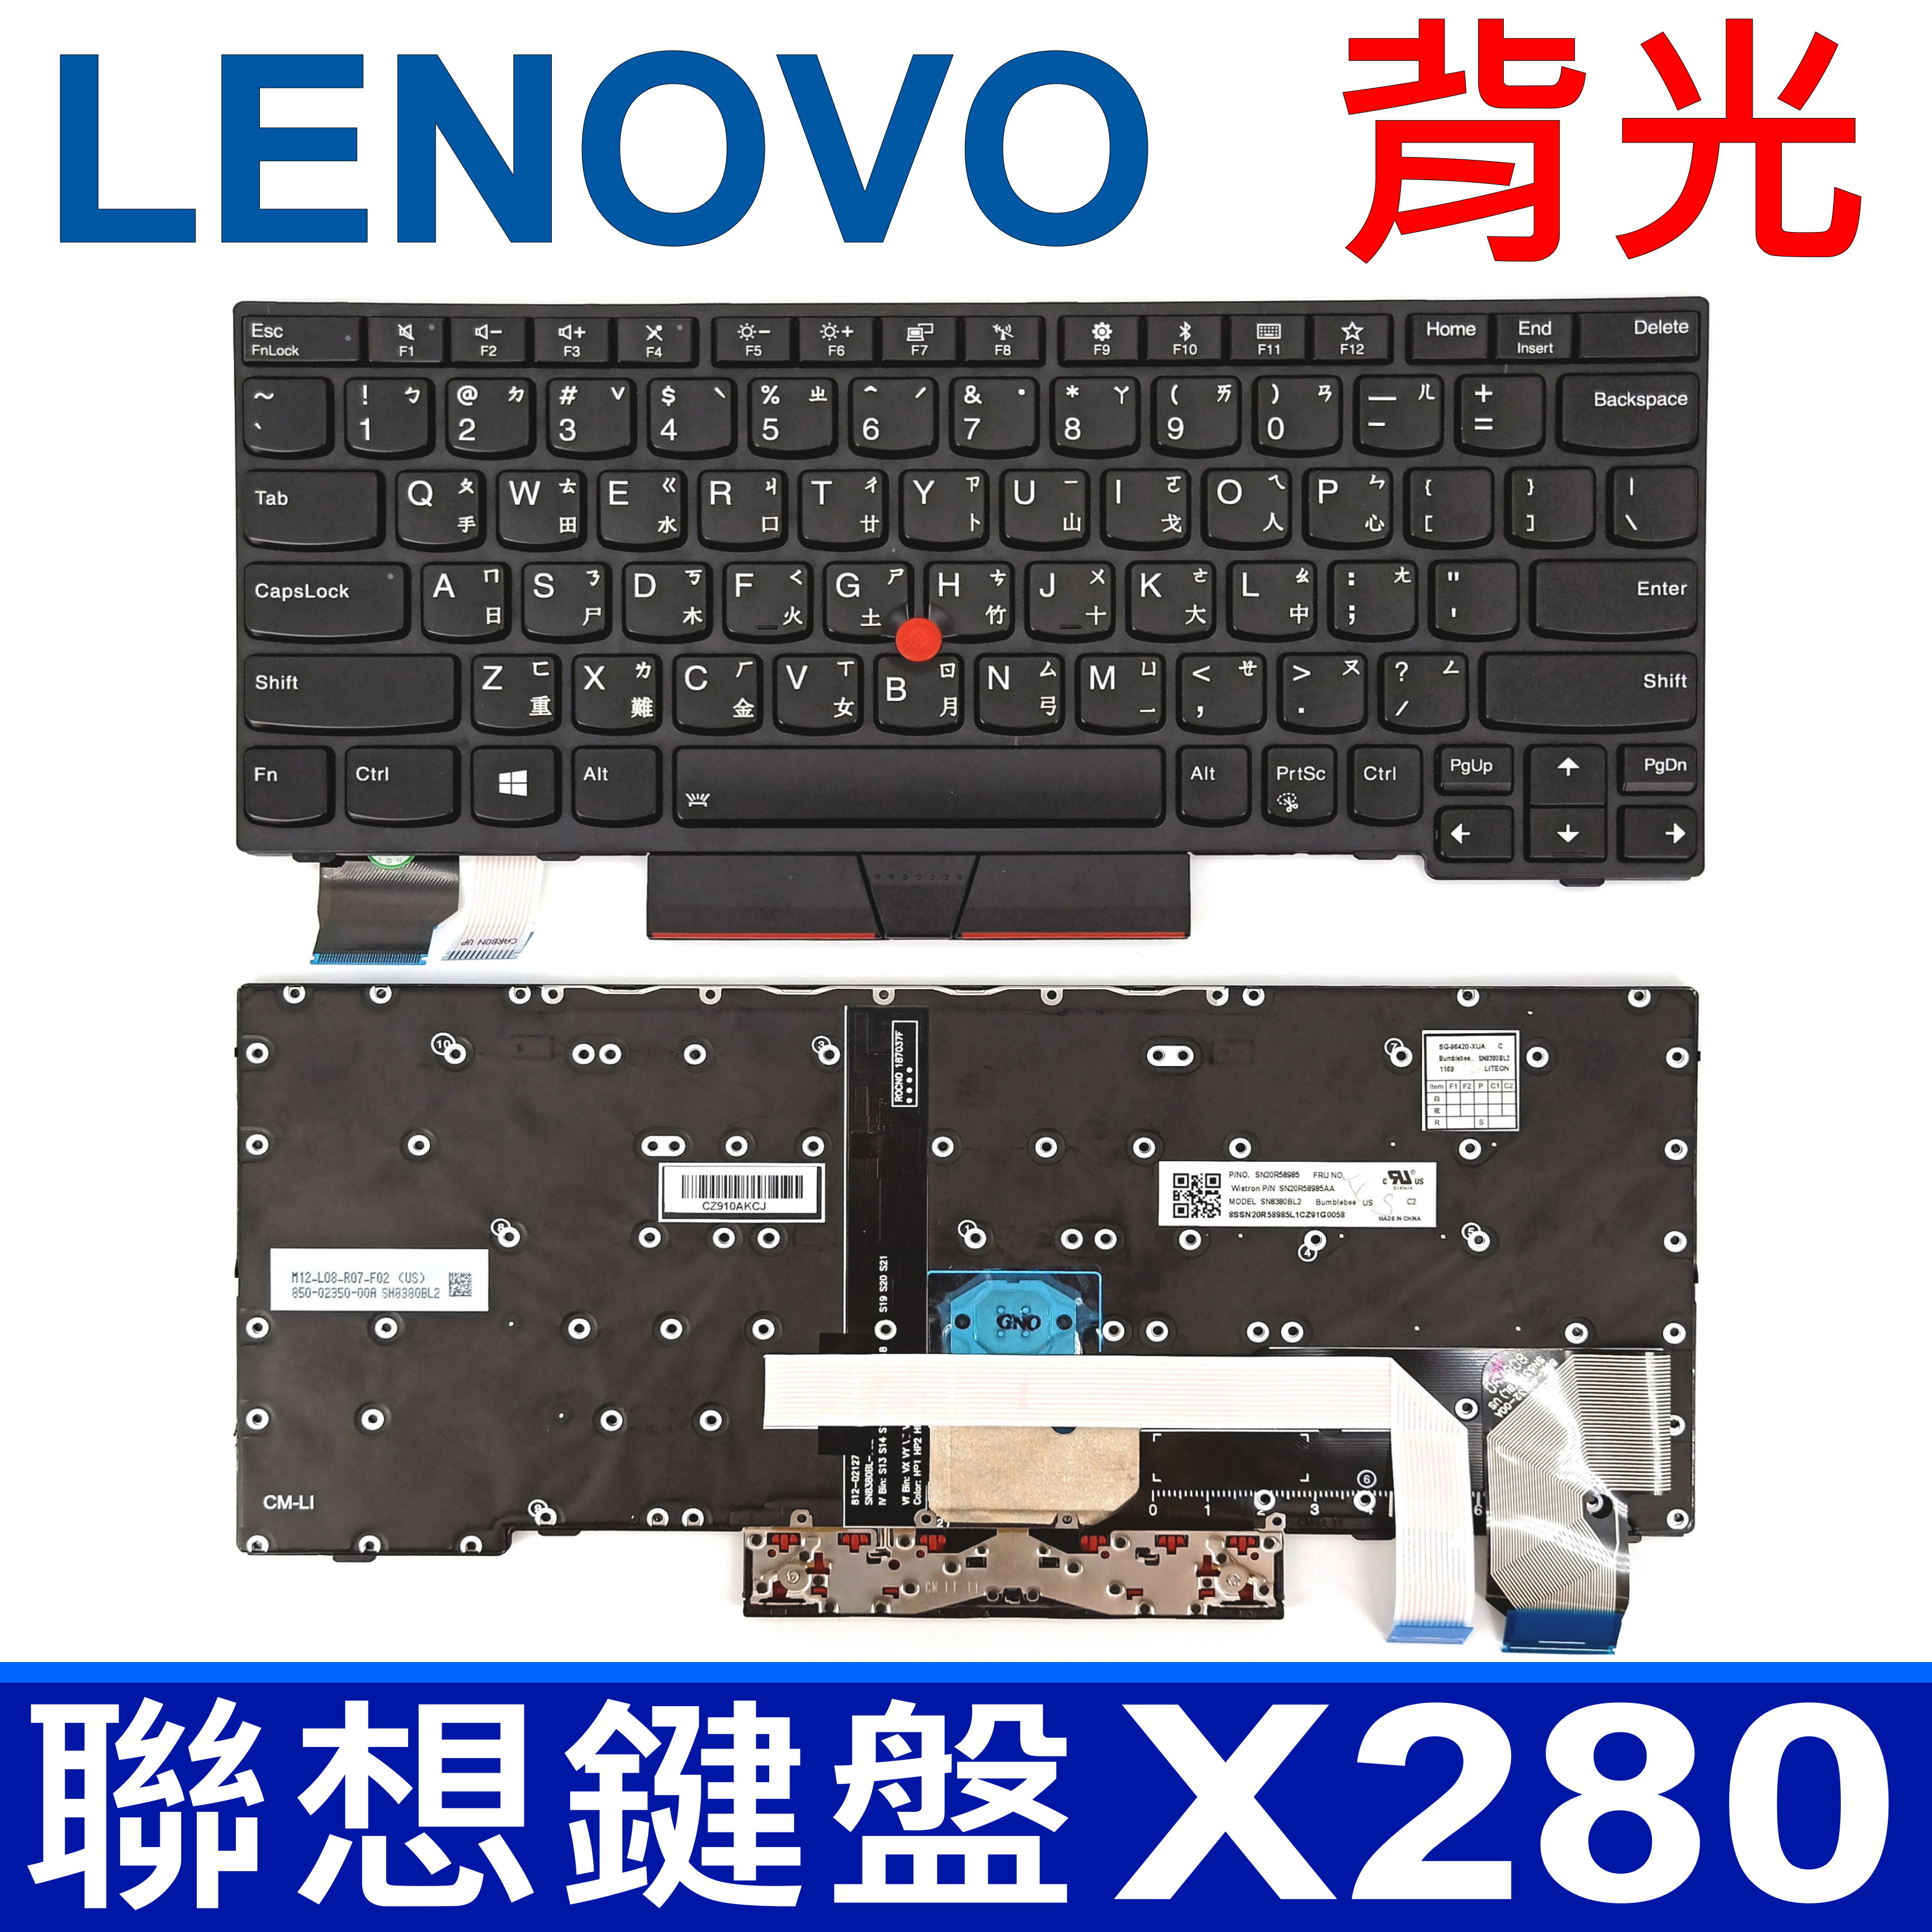 LENOVO X280 背光 指點 繁體中文 鍵盤 Yoga X280 X390 X395 X13 01YP040